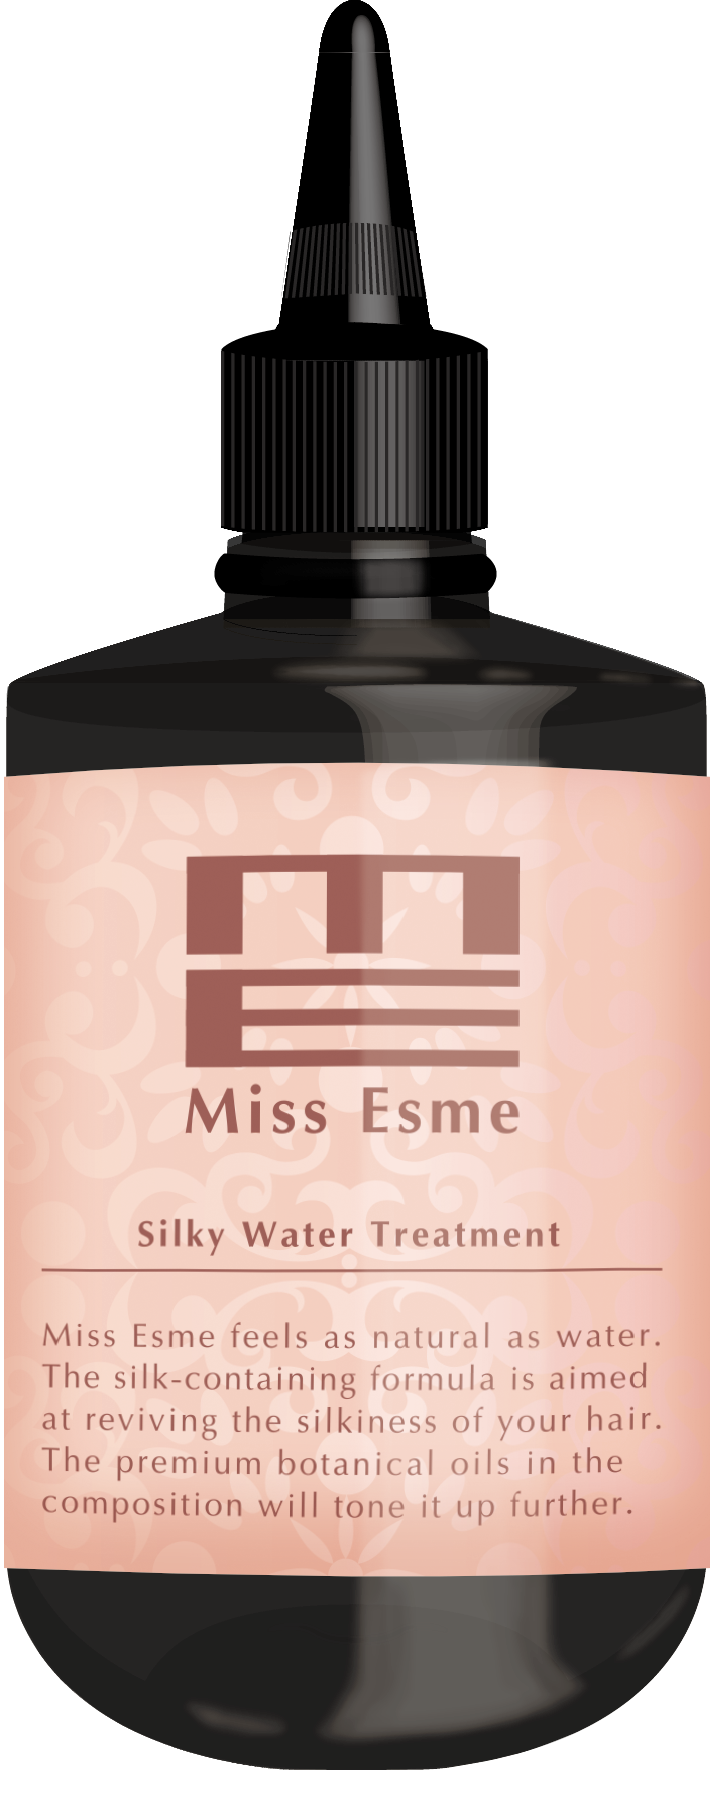 Silky Water Treatmentボトル